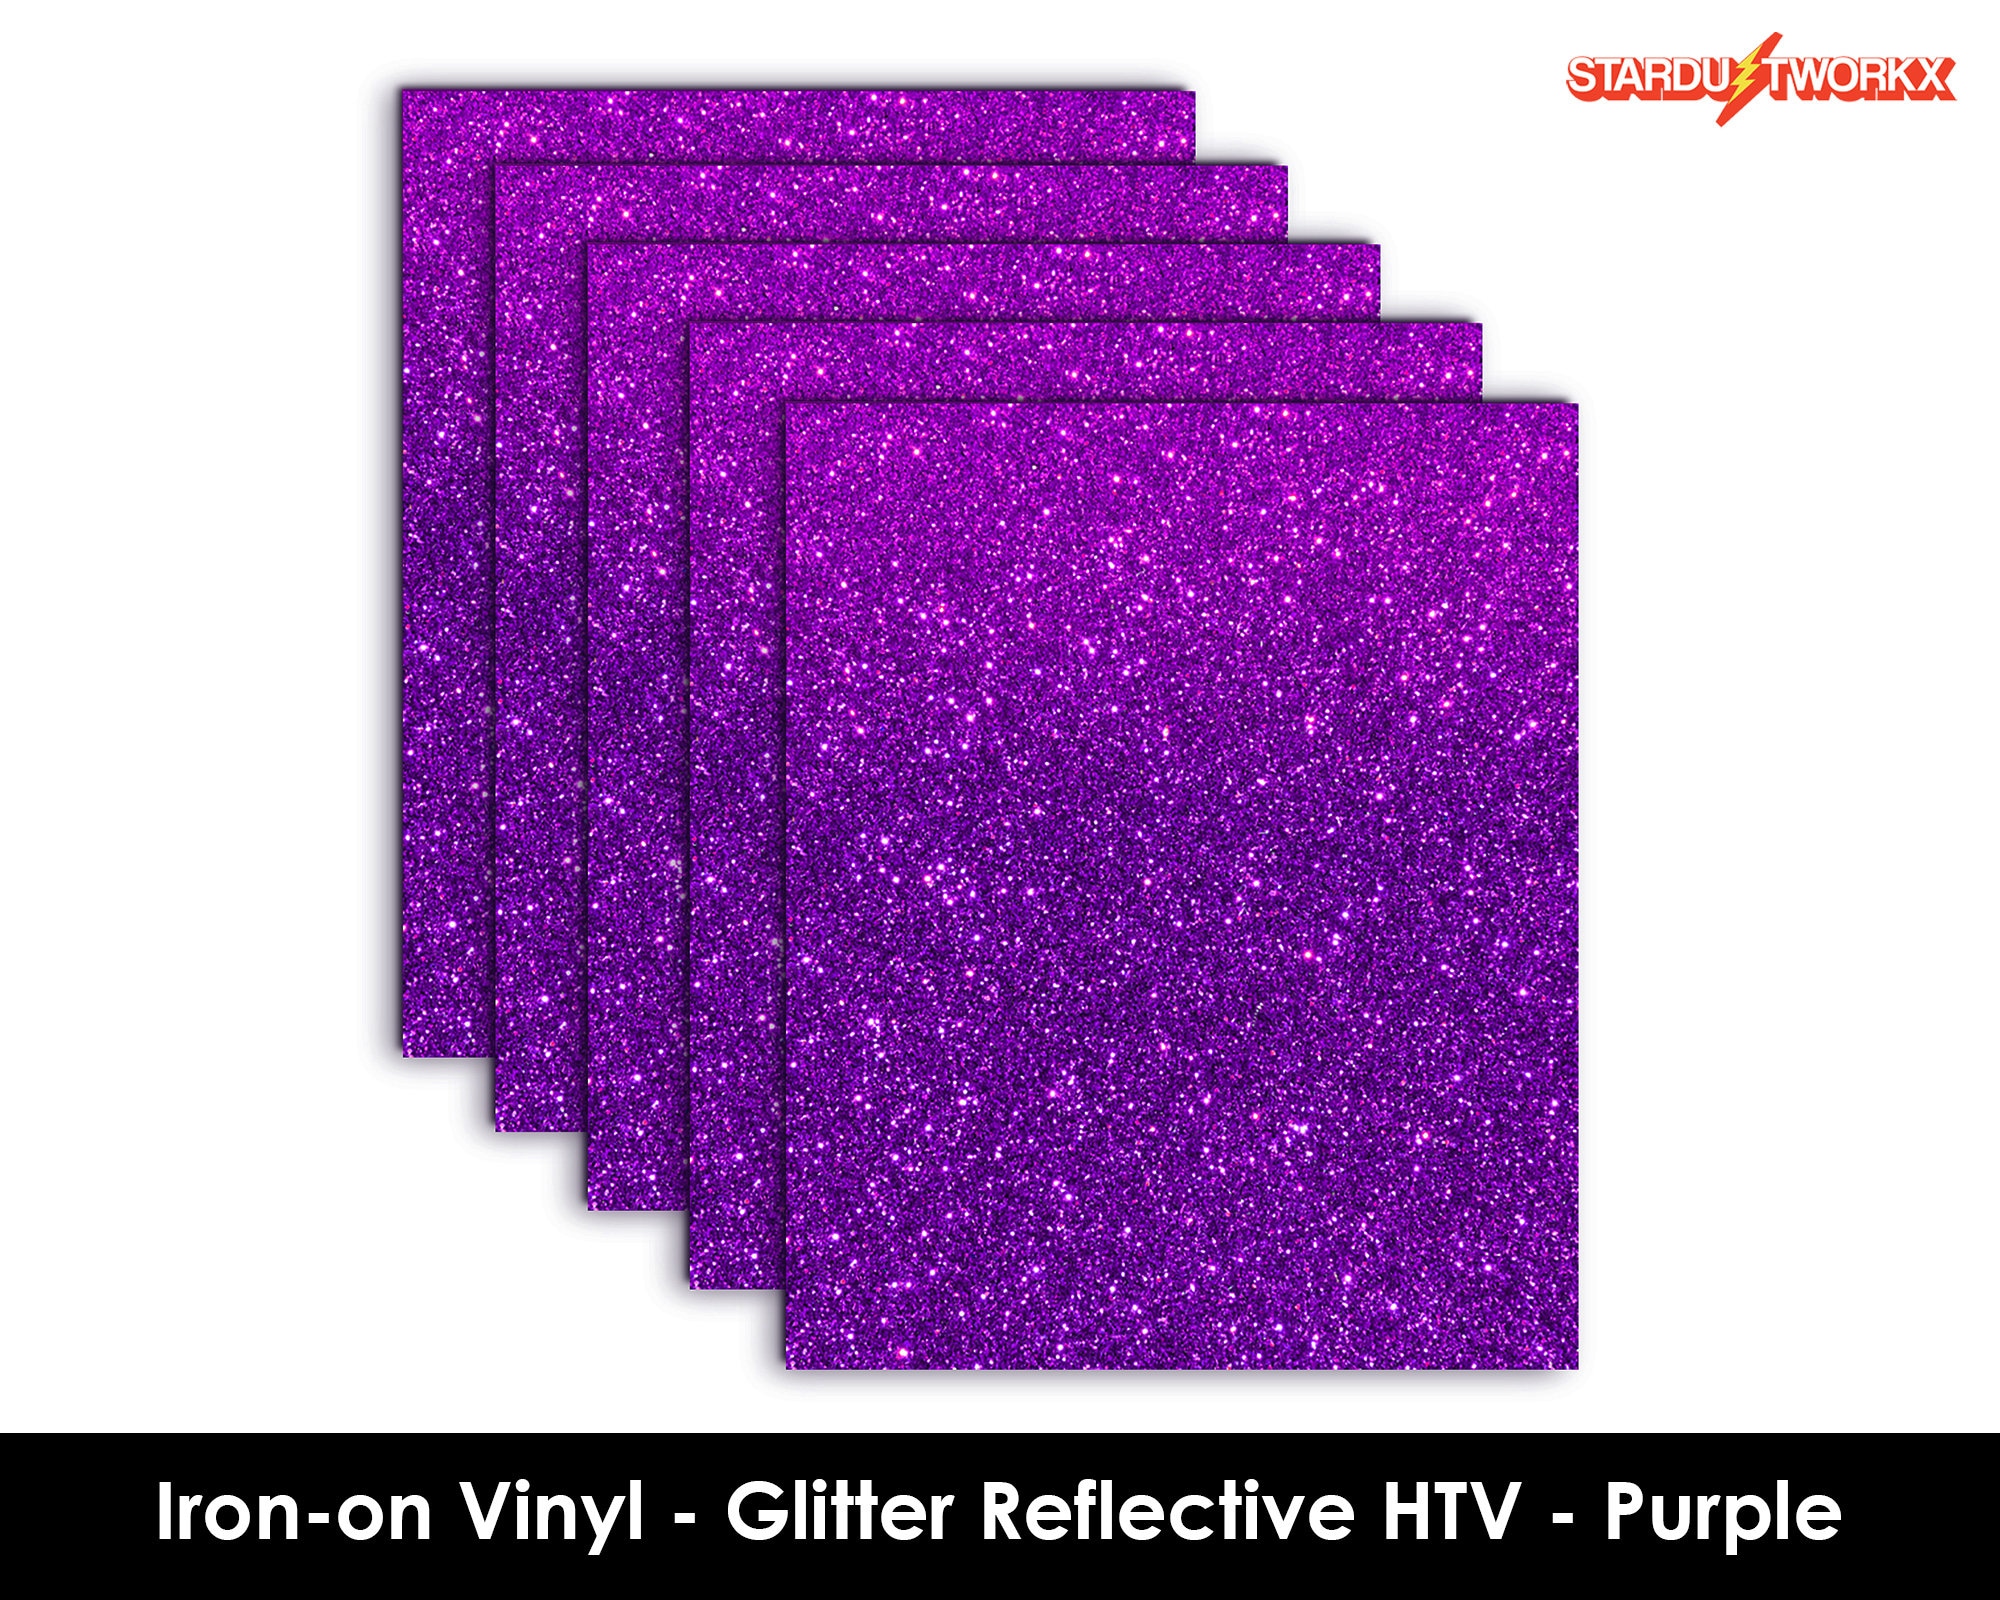 Stardustworkx Glitter Reflective HTV Purple 10 X 12 Heat Transfer